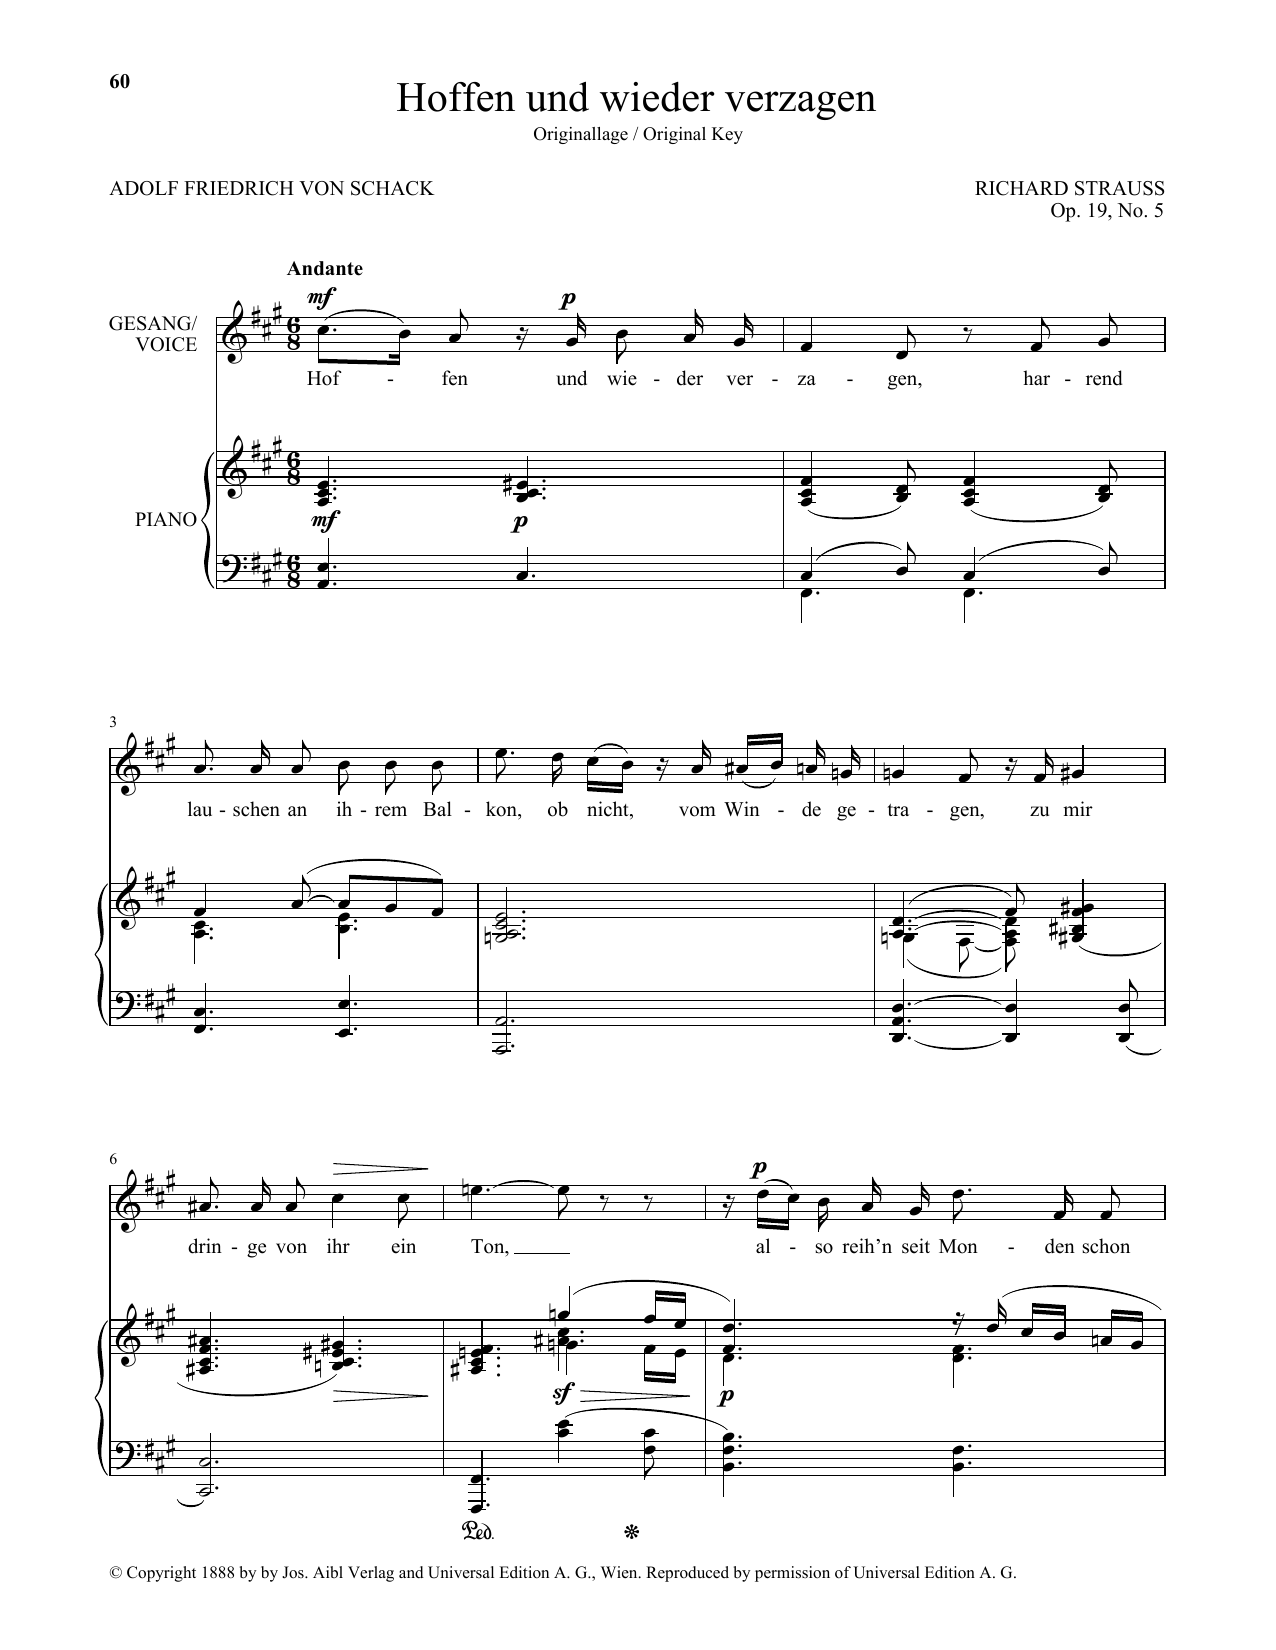 Download Richard Strauss Hoffen Und Wieder Verzagen (High Voice) Sheet Music and learn how to play Piano & Vocal PDF digital score in minutes